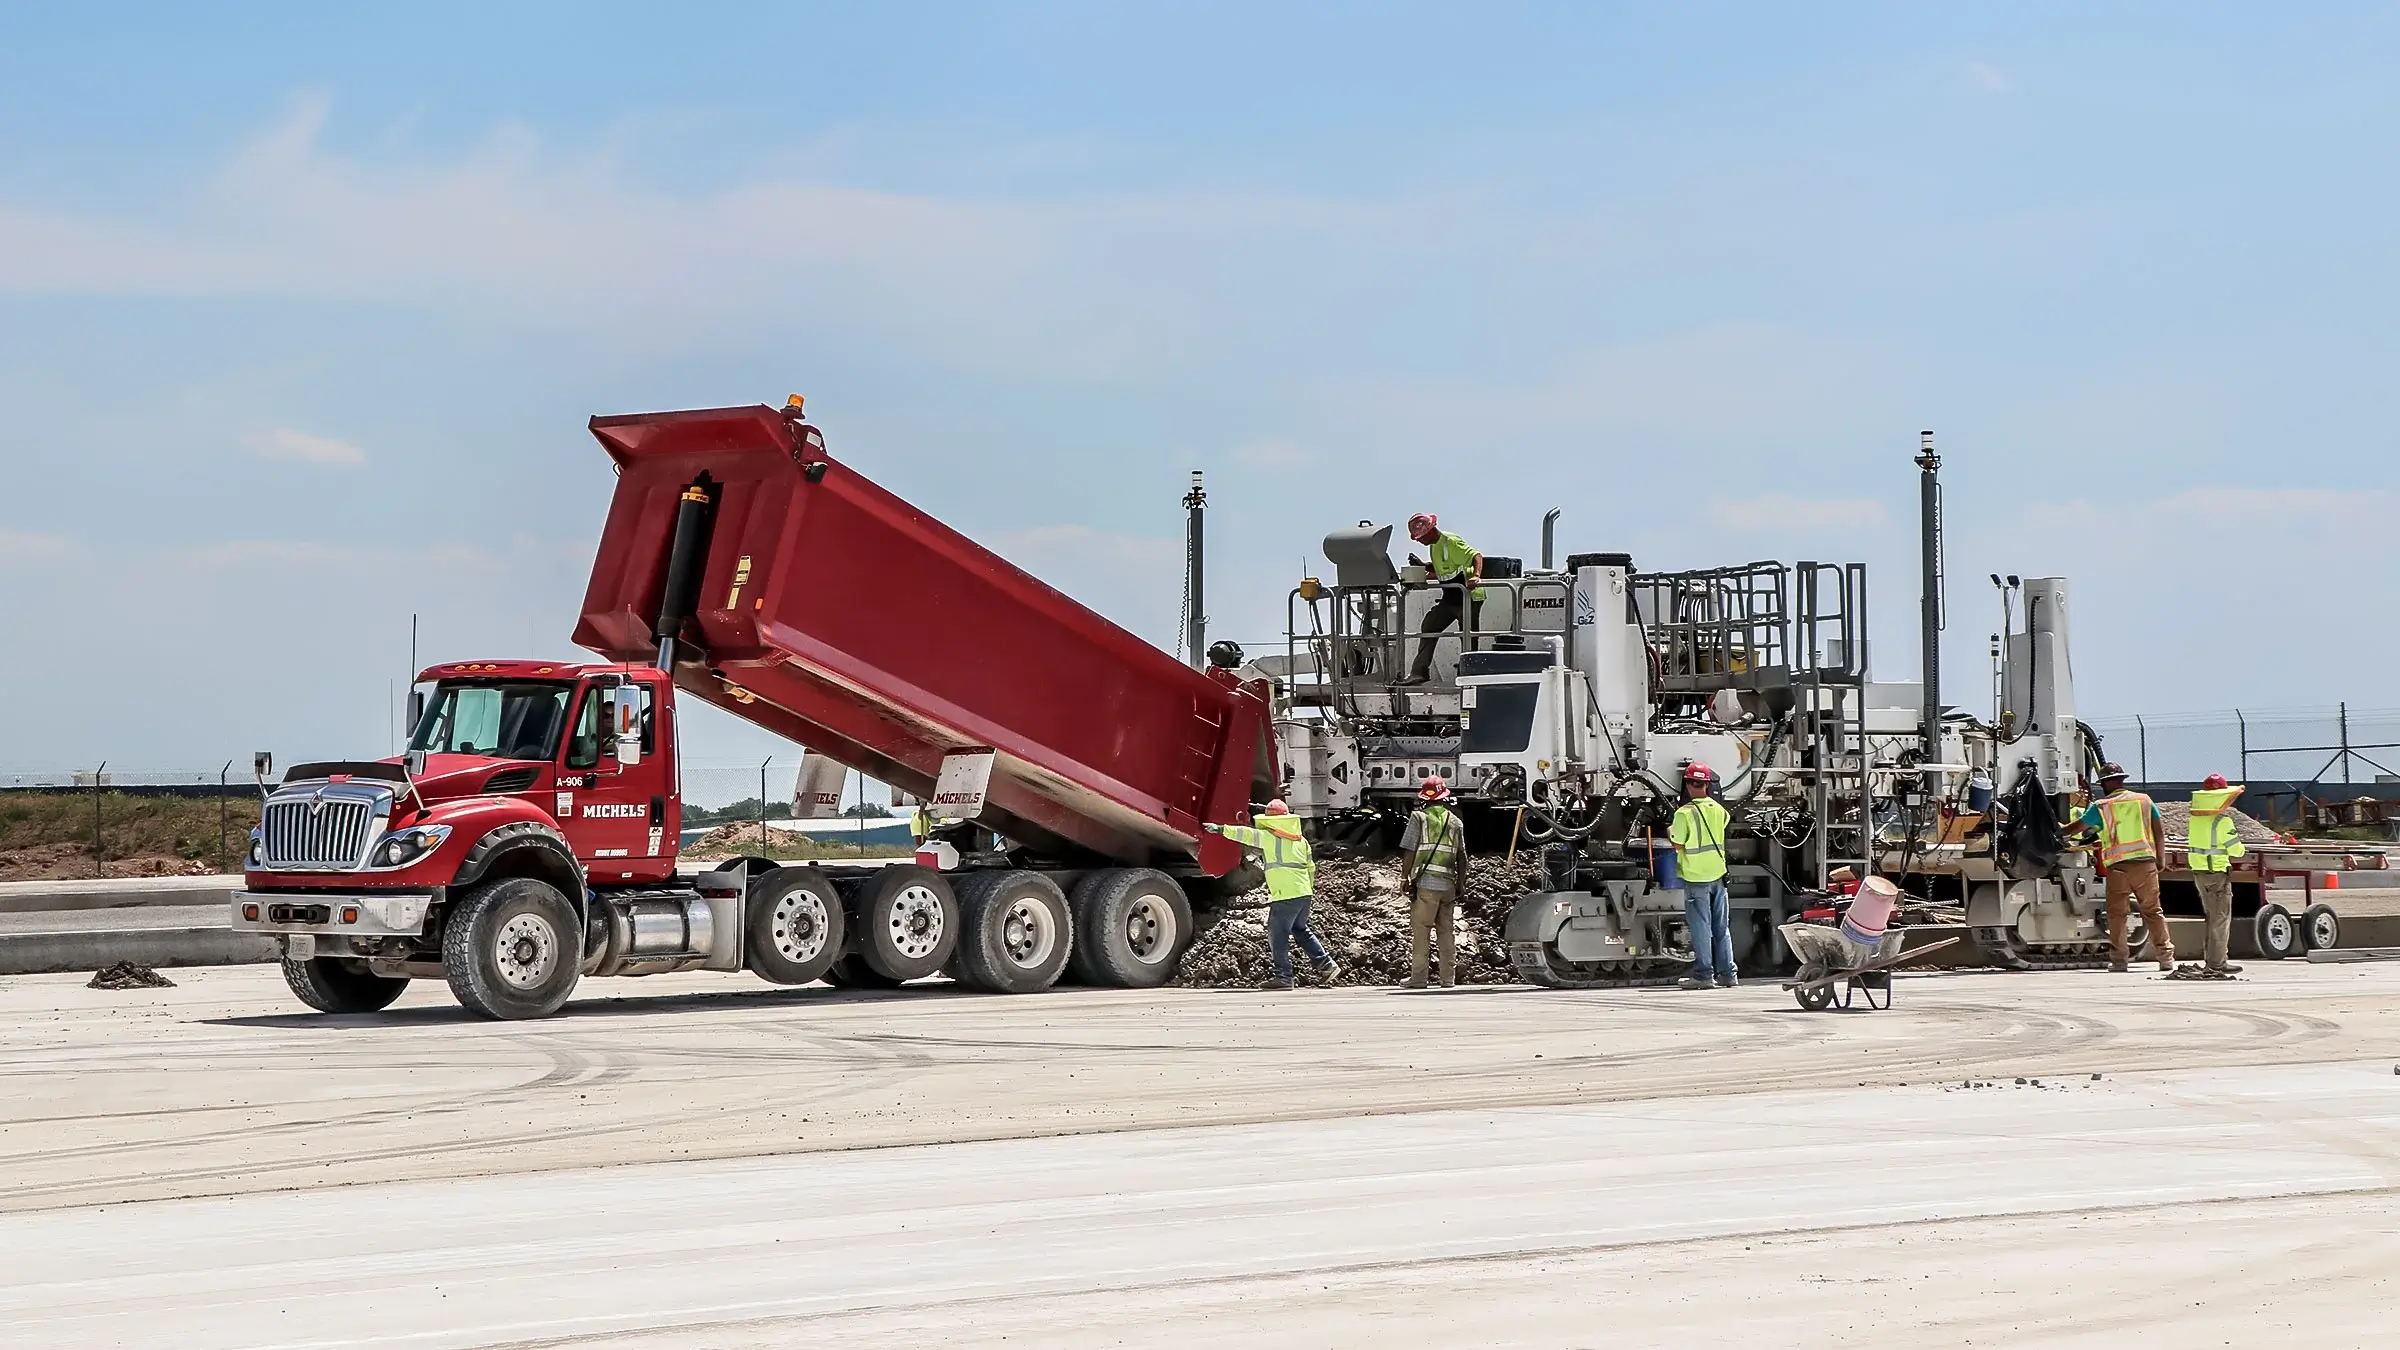 A dump truck assists a paving machine at an airport